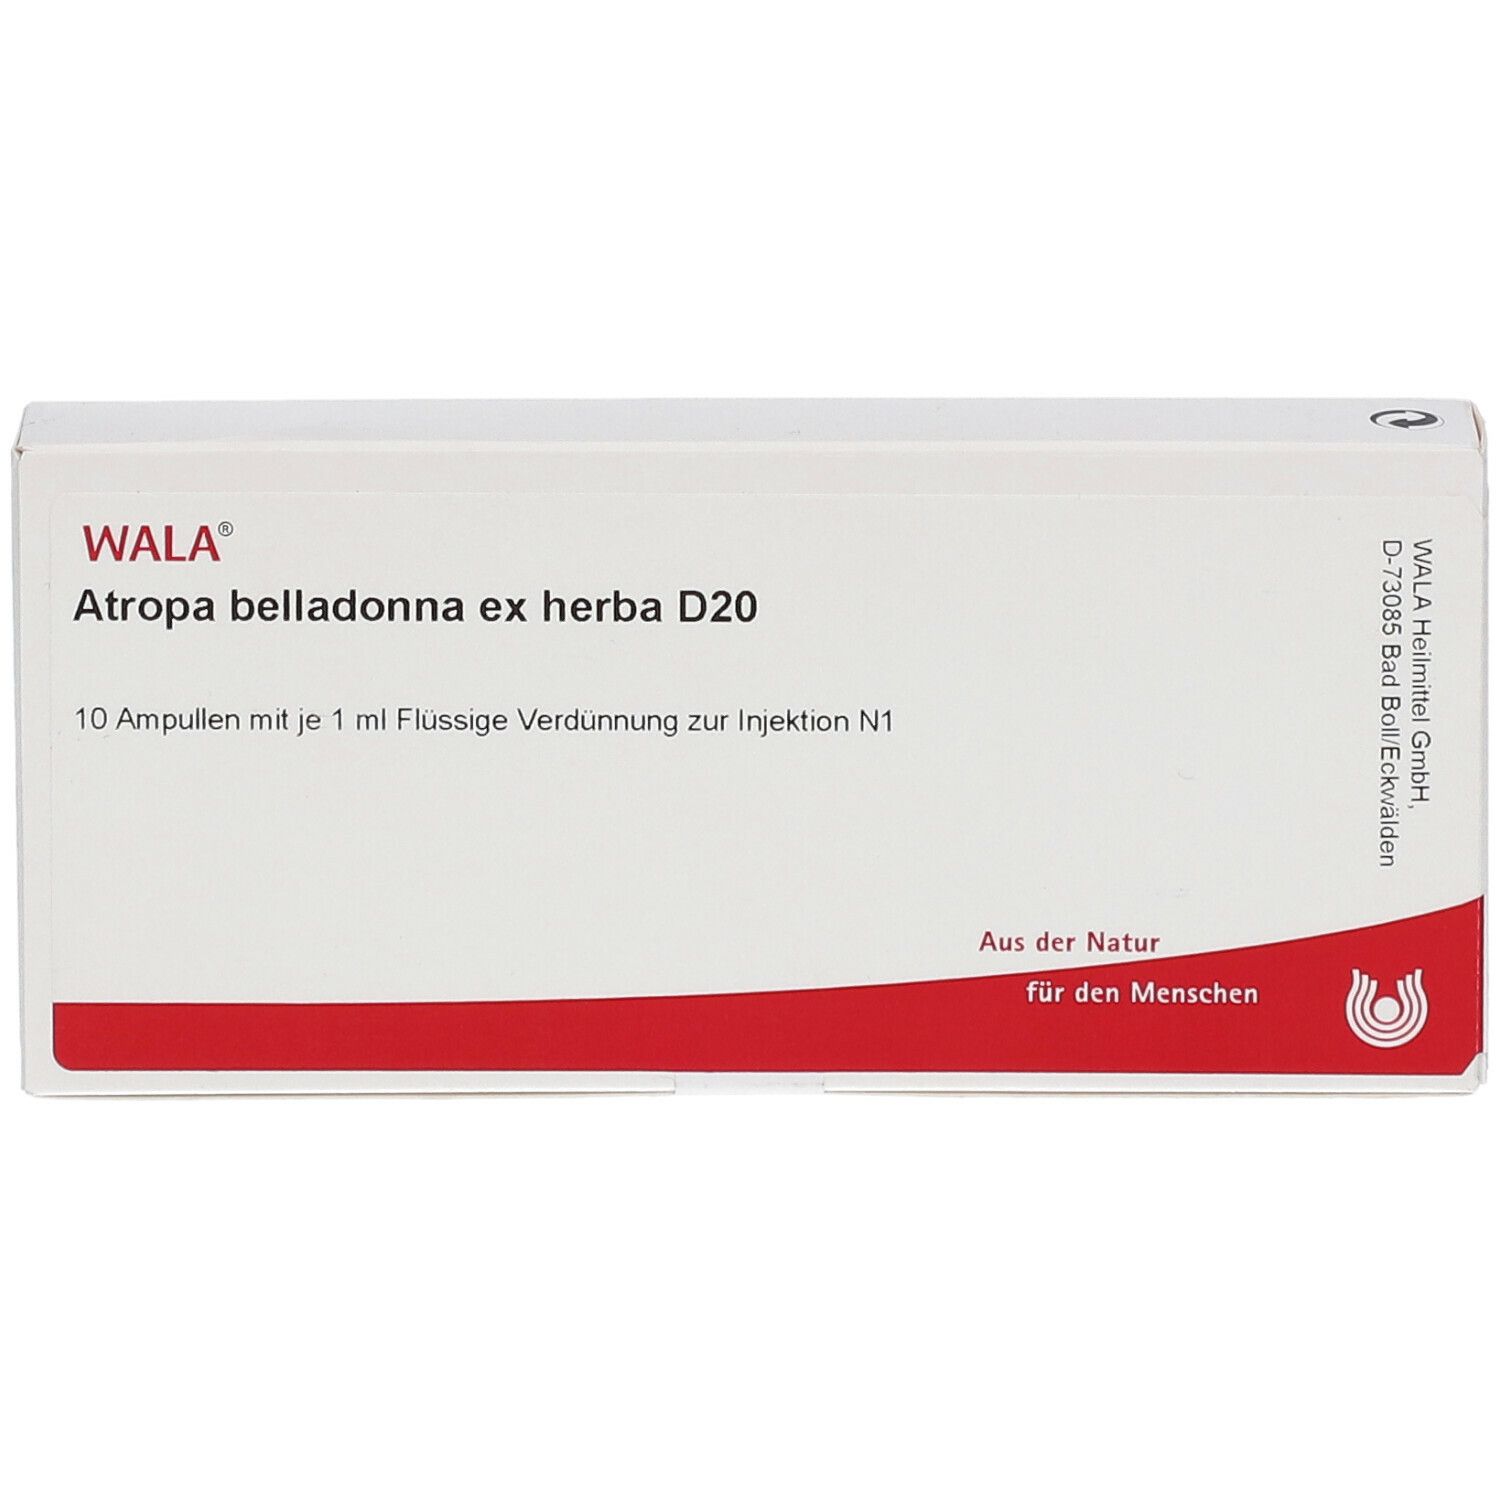 WALA® Atropa belladonna ex herba D 20